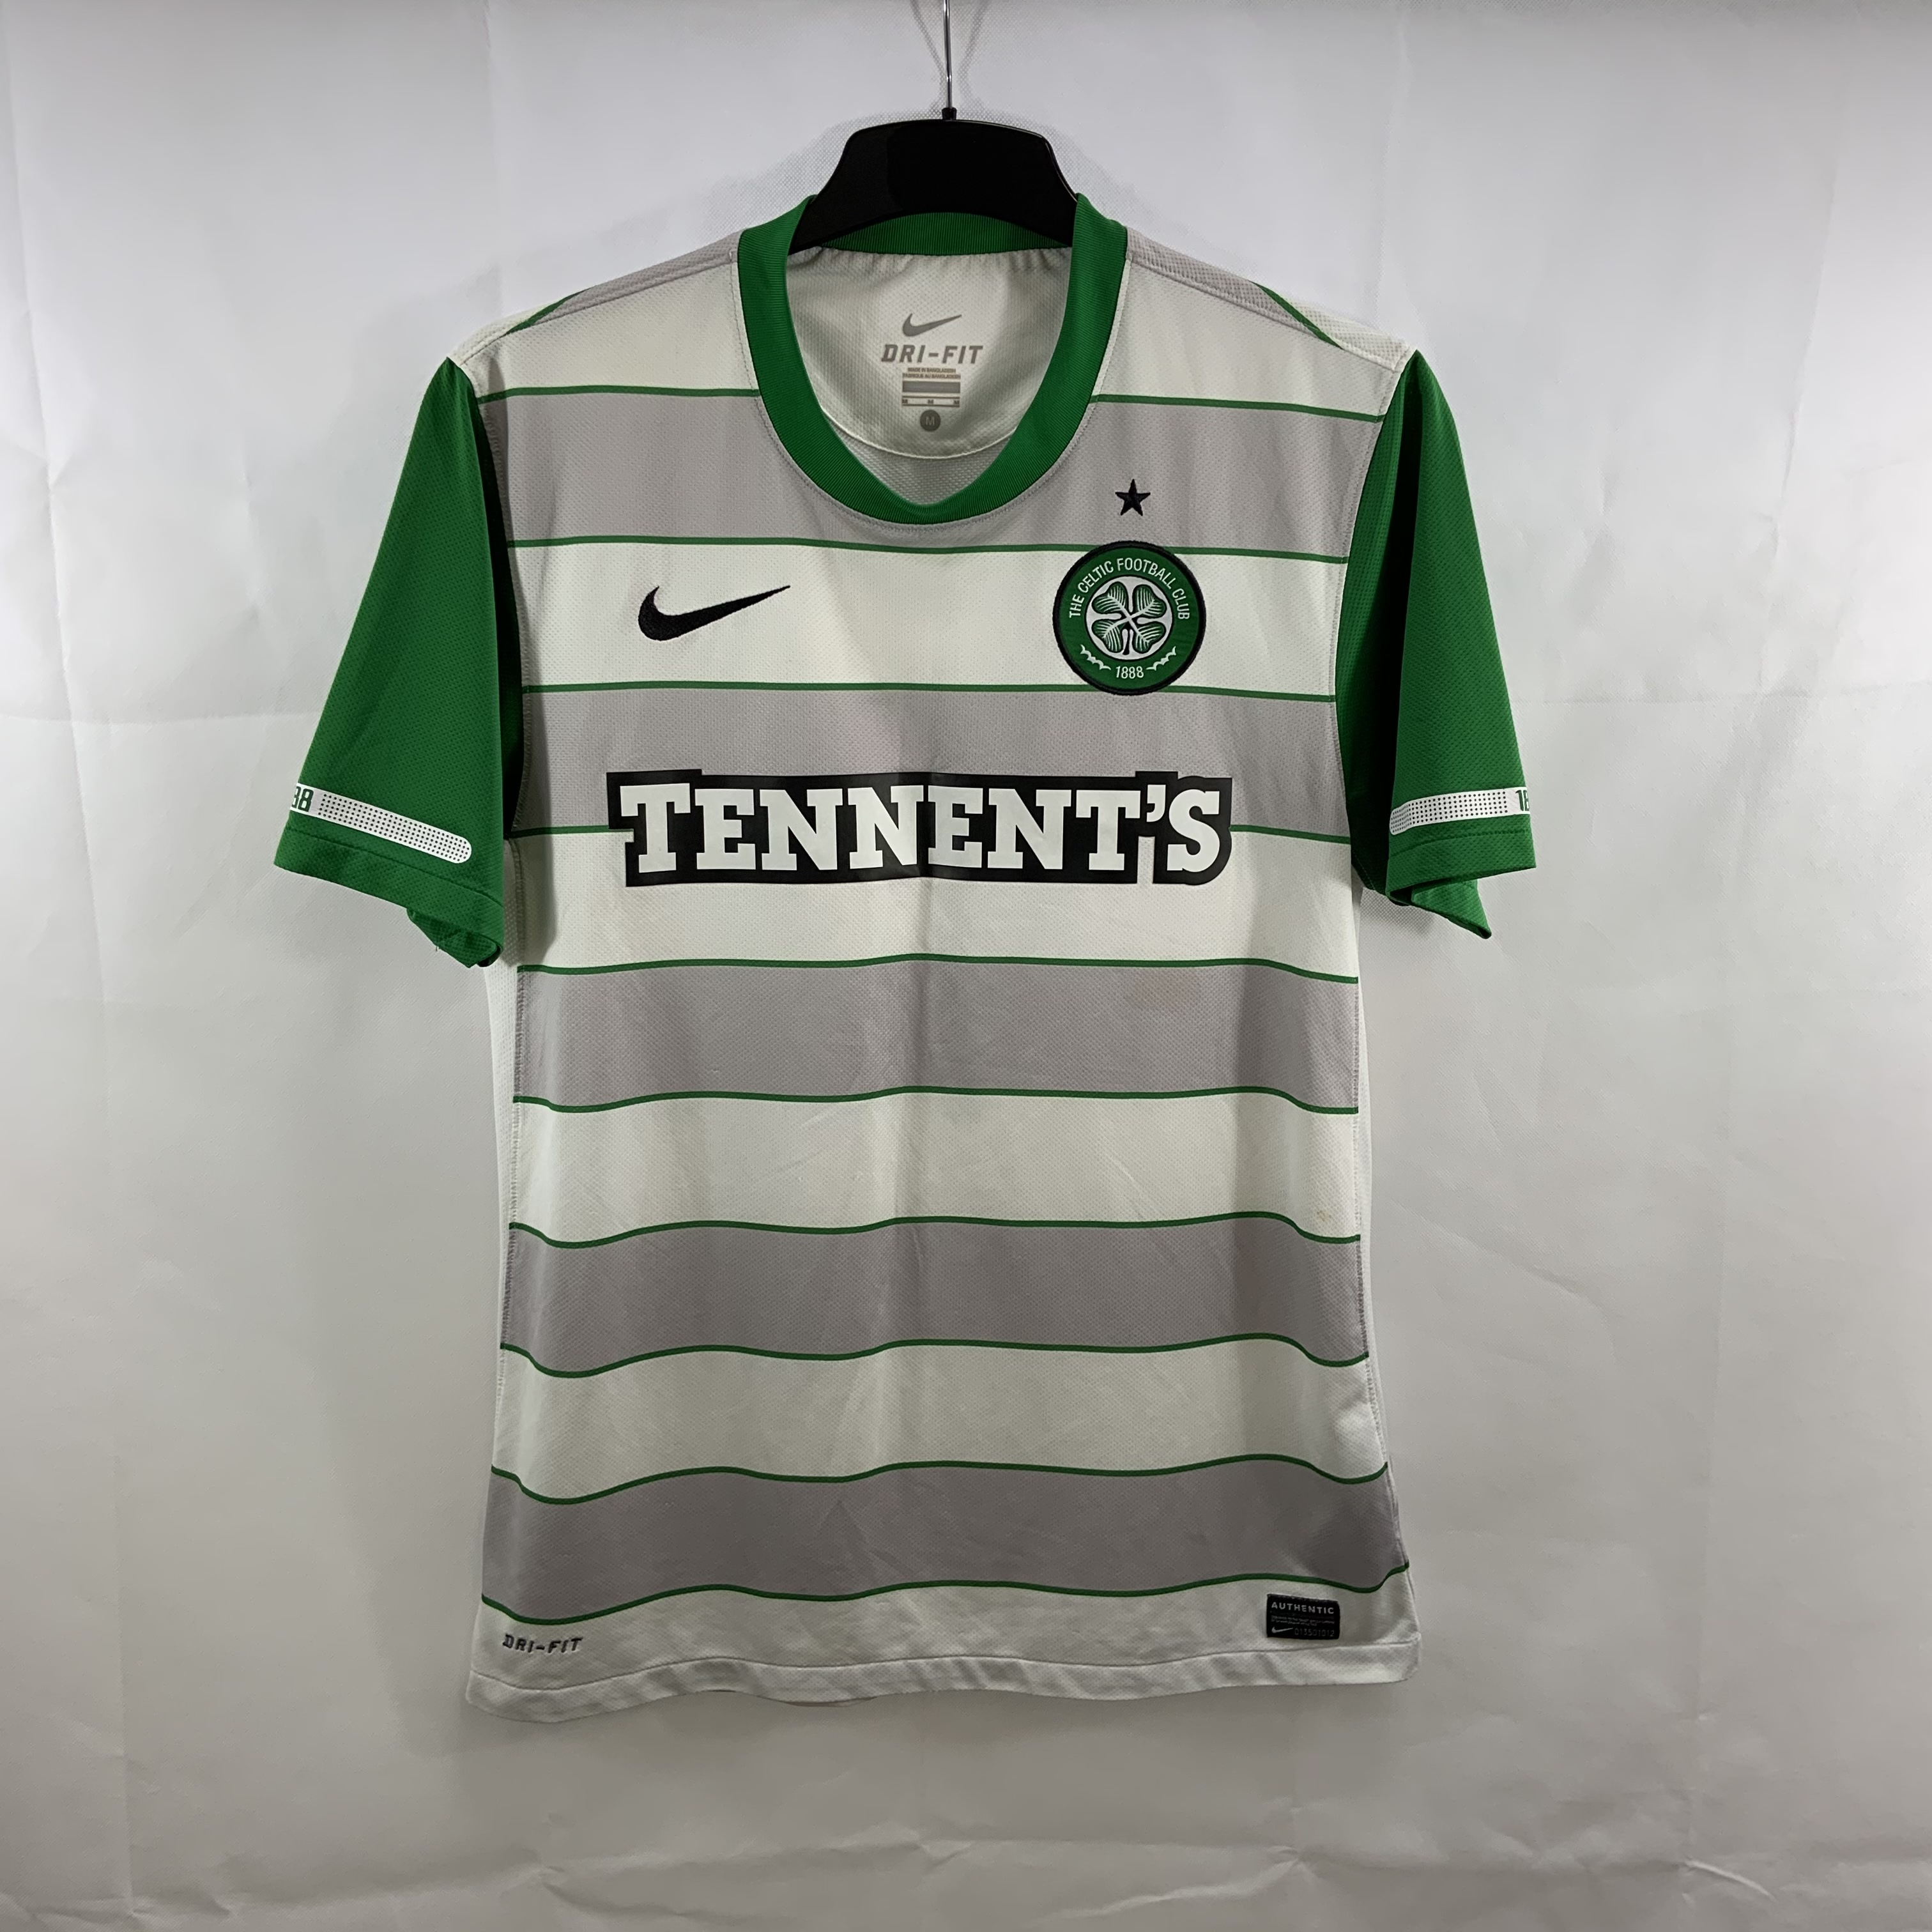 Nike Launch New Celtic 2011/12 Away Kit – Looks A Little Like The